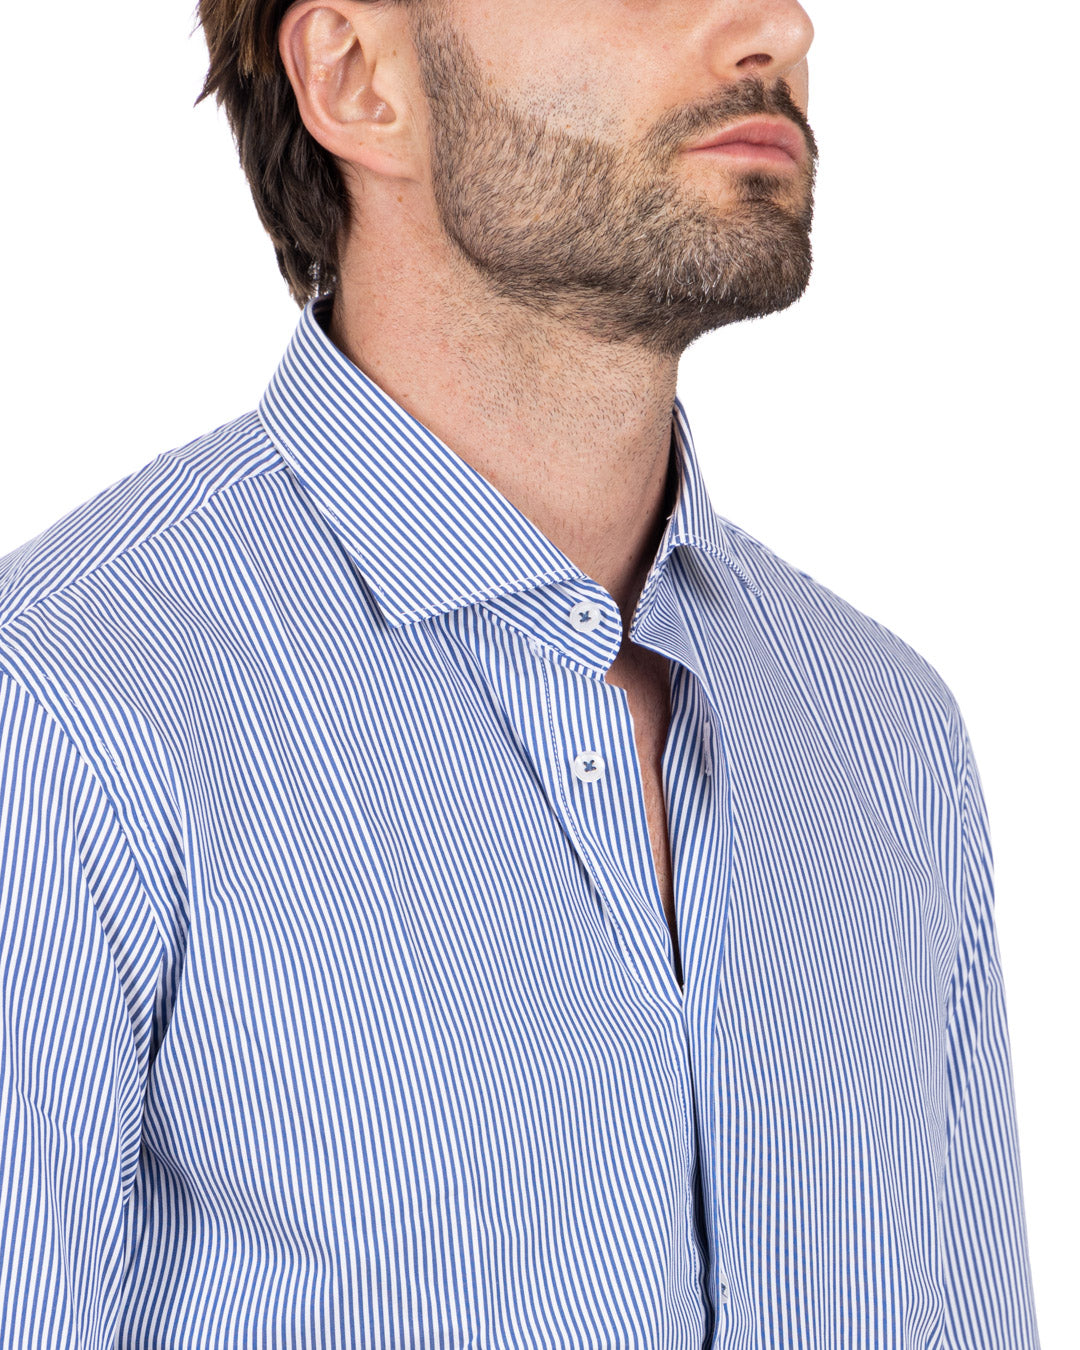 Shirt - slim fit narrow stripe blue